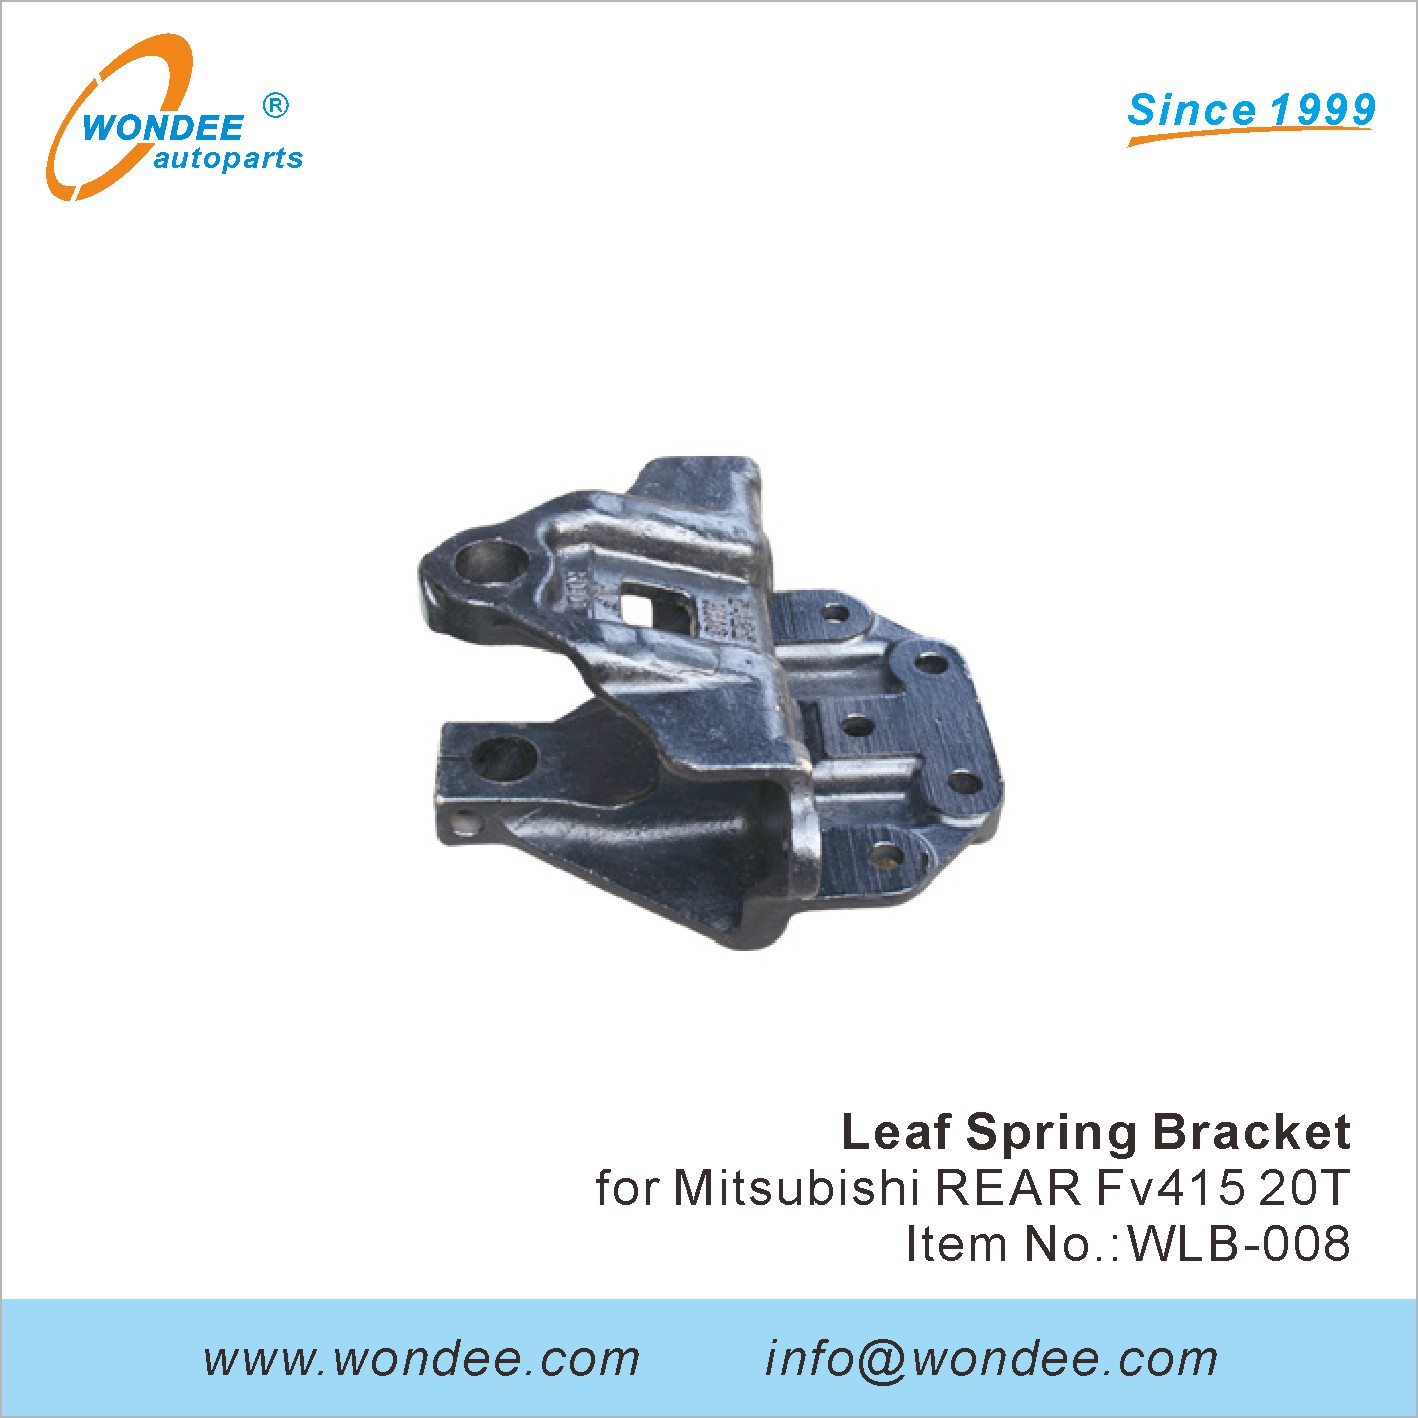 WONDEE leaf spring bracket (8)